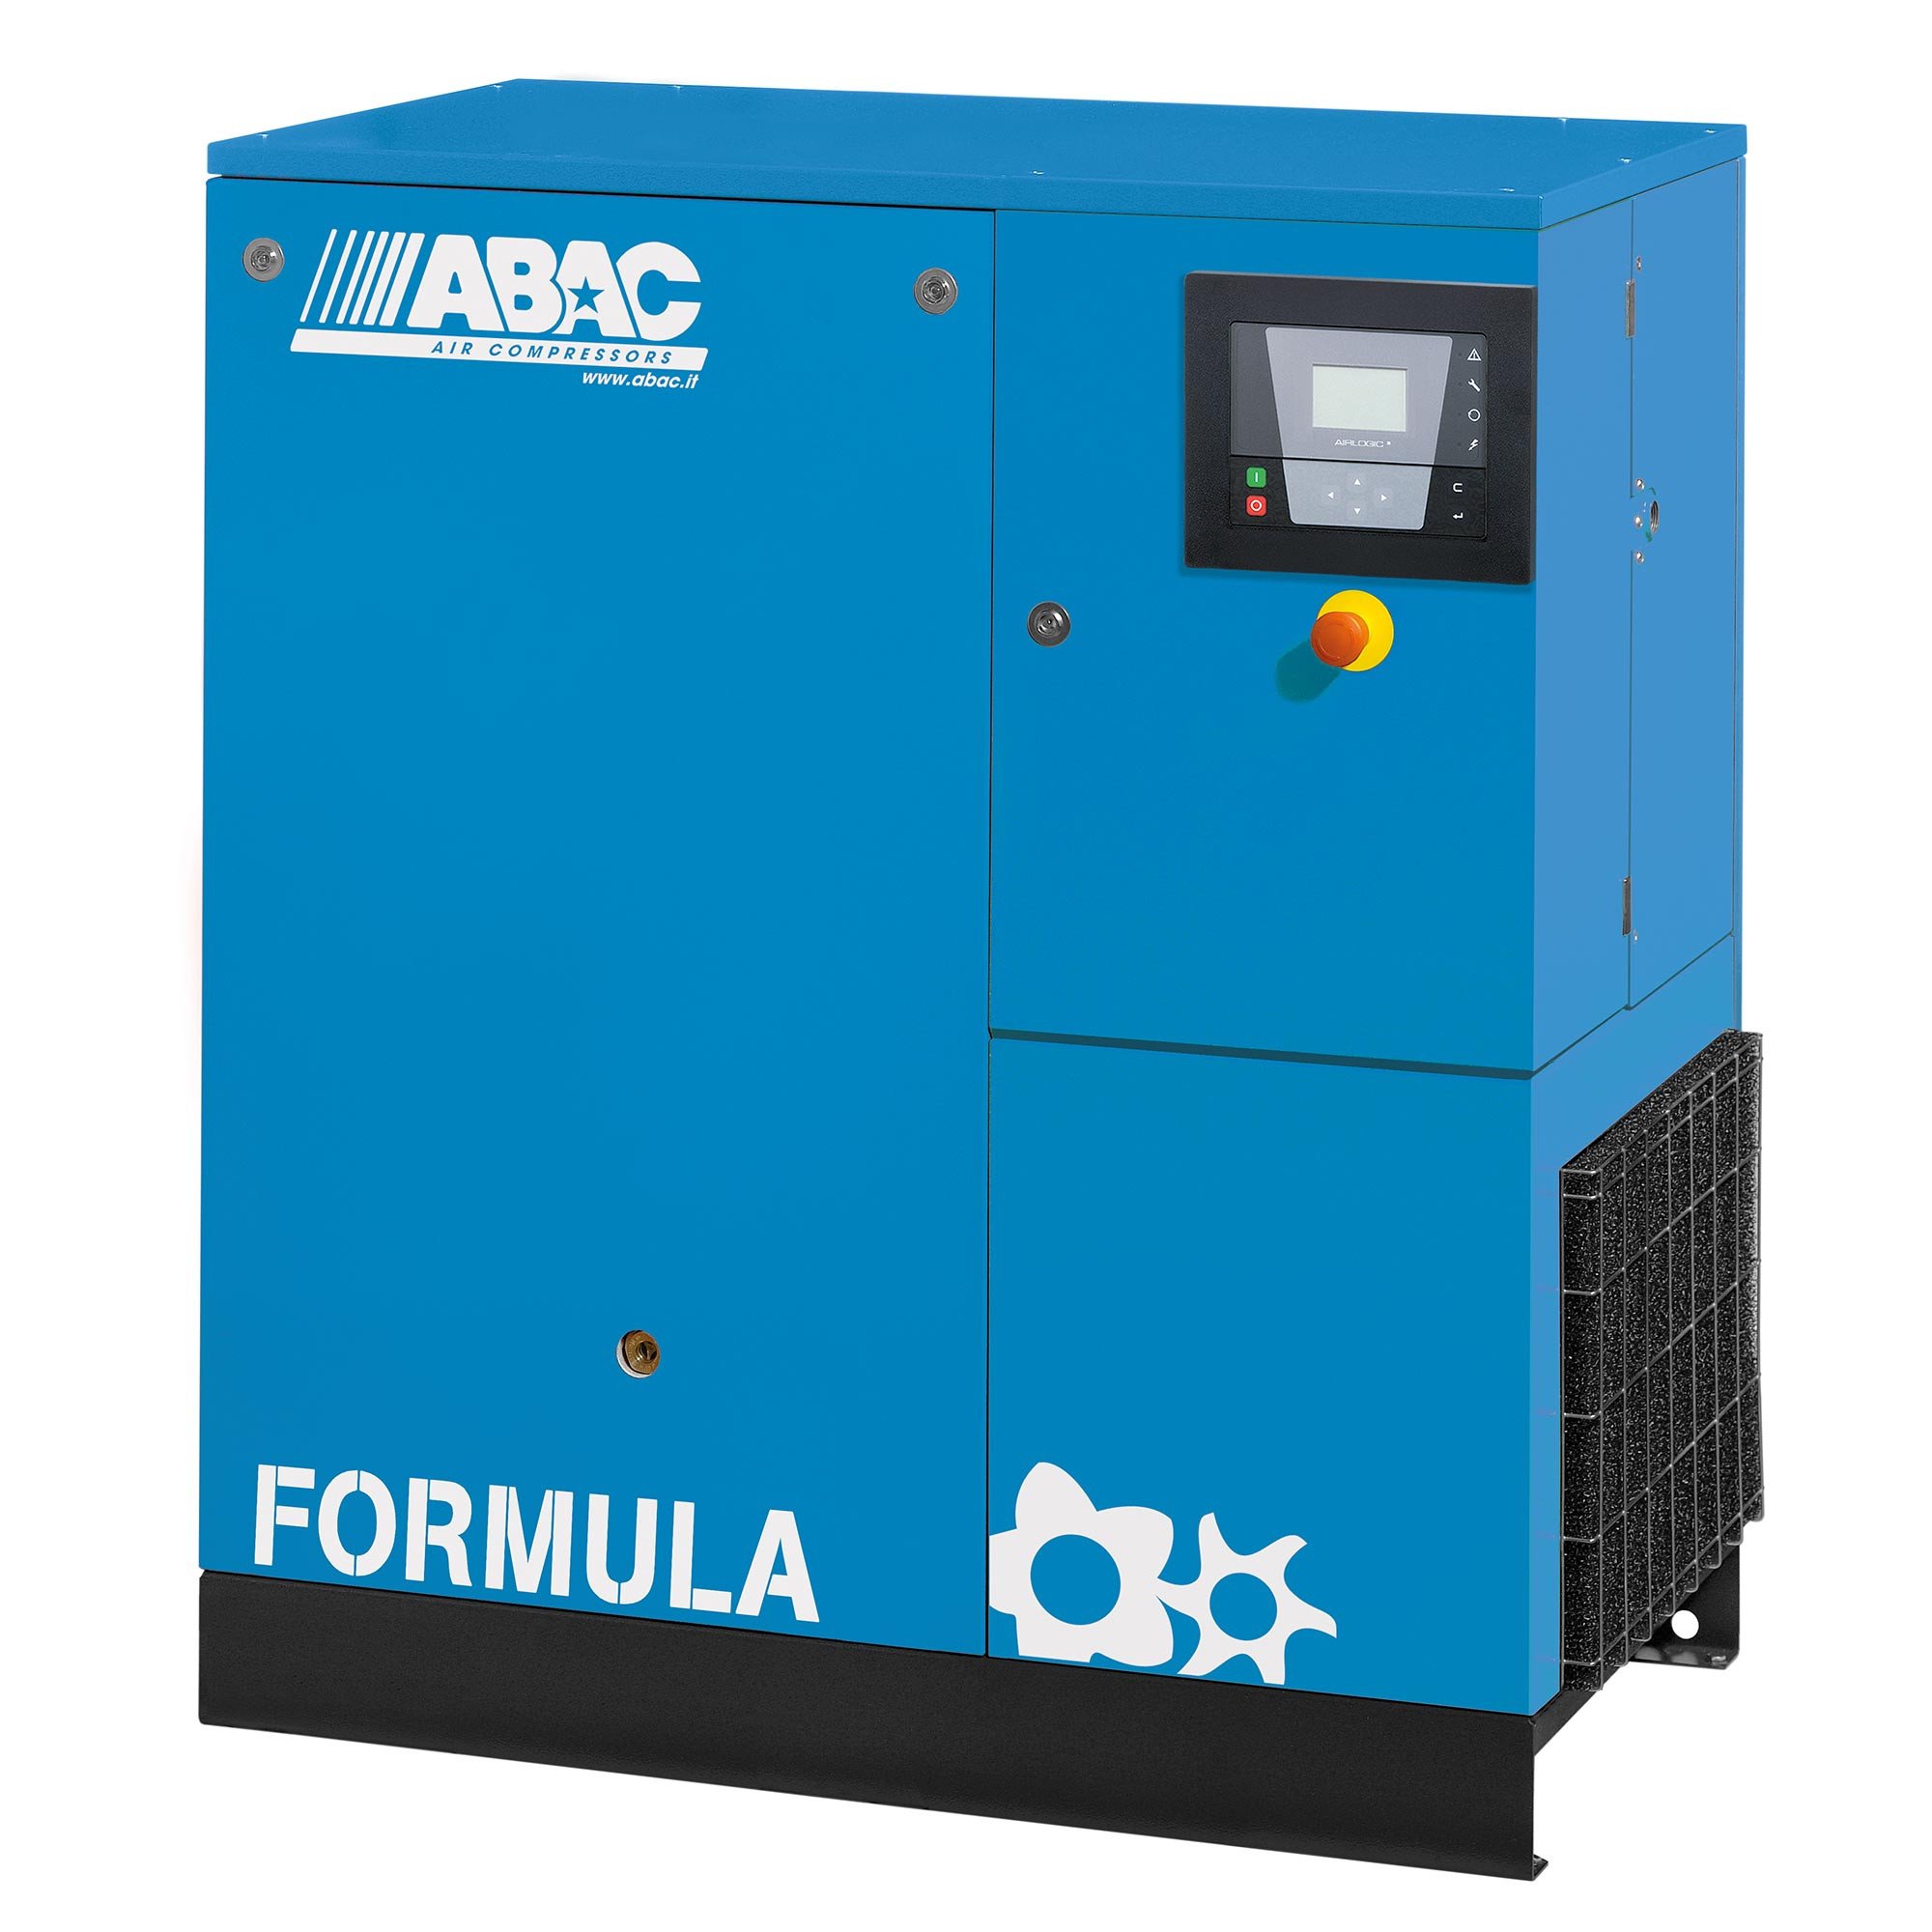 ABAC公式E 11千瓦固定速度旋转螺杆空气压缩机与干燥机| 58.5 CFM基本单位